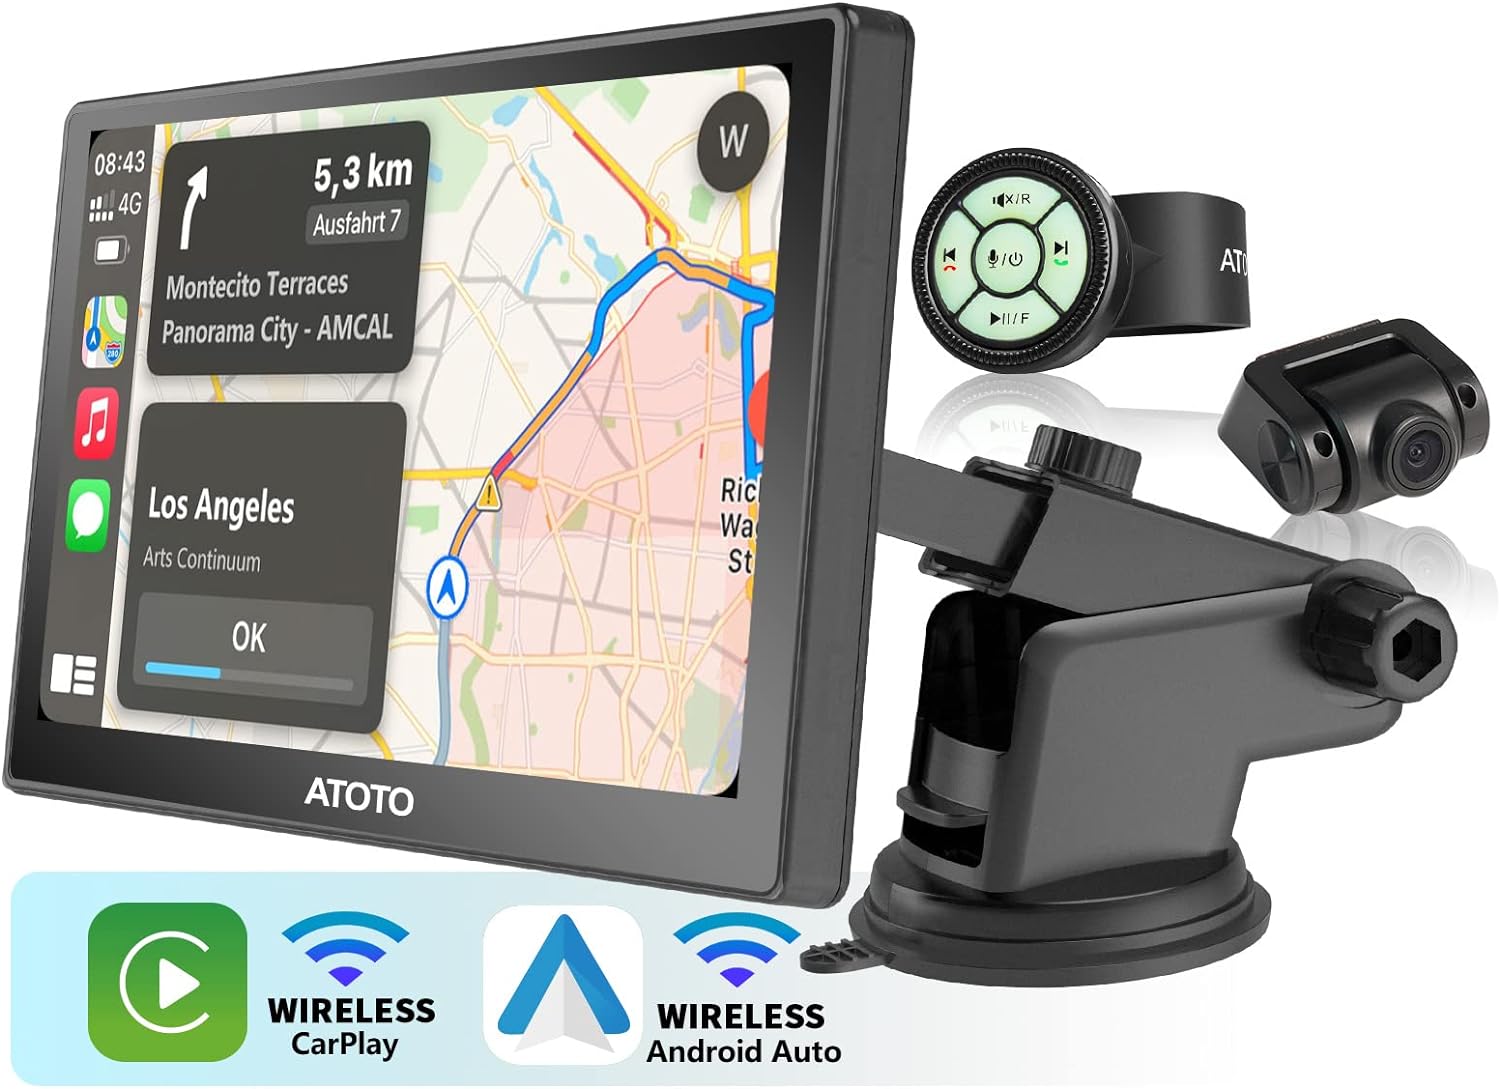 ATOTO P8 7 inch Touchscreen Portable On-Dash Navigation, Wireless ...